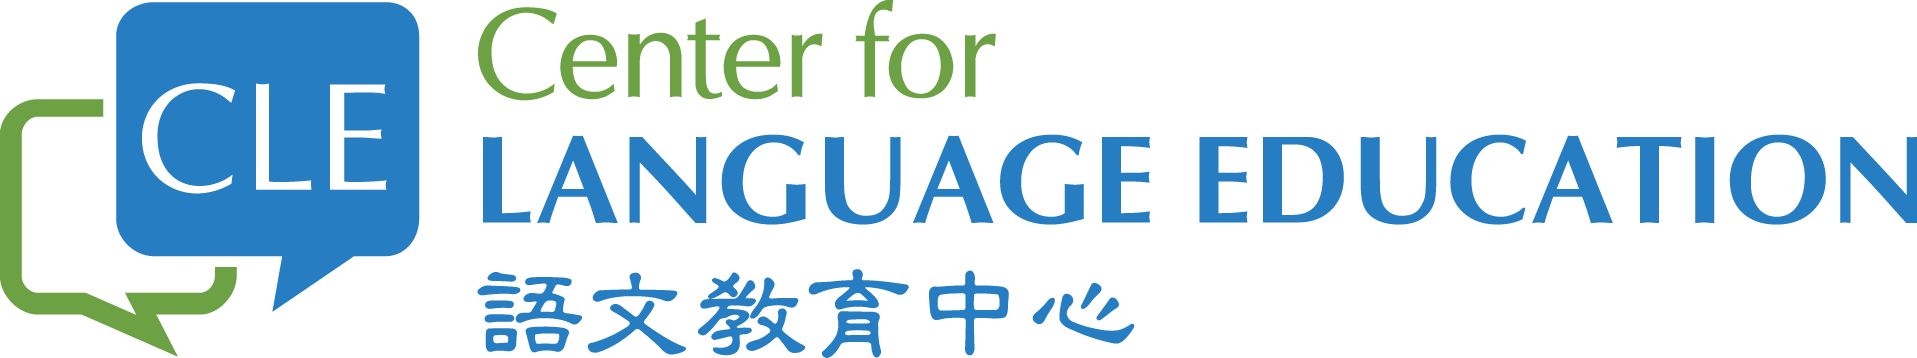 Center for Language Education